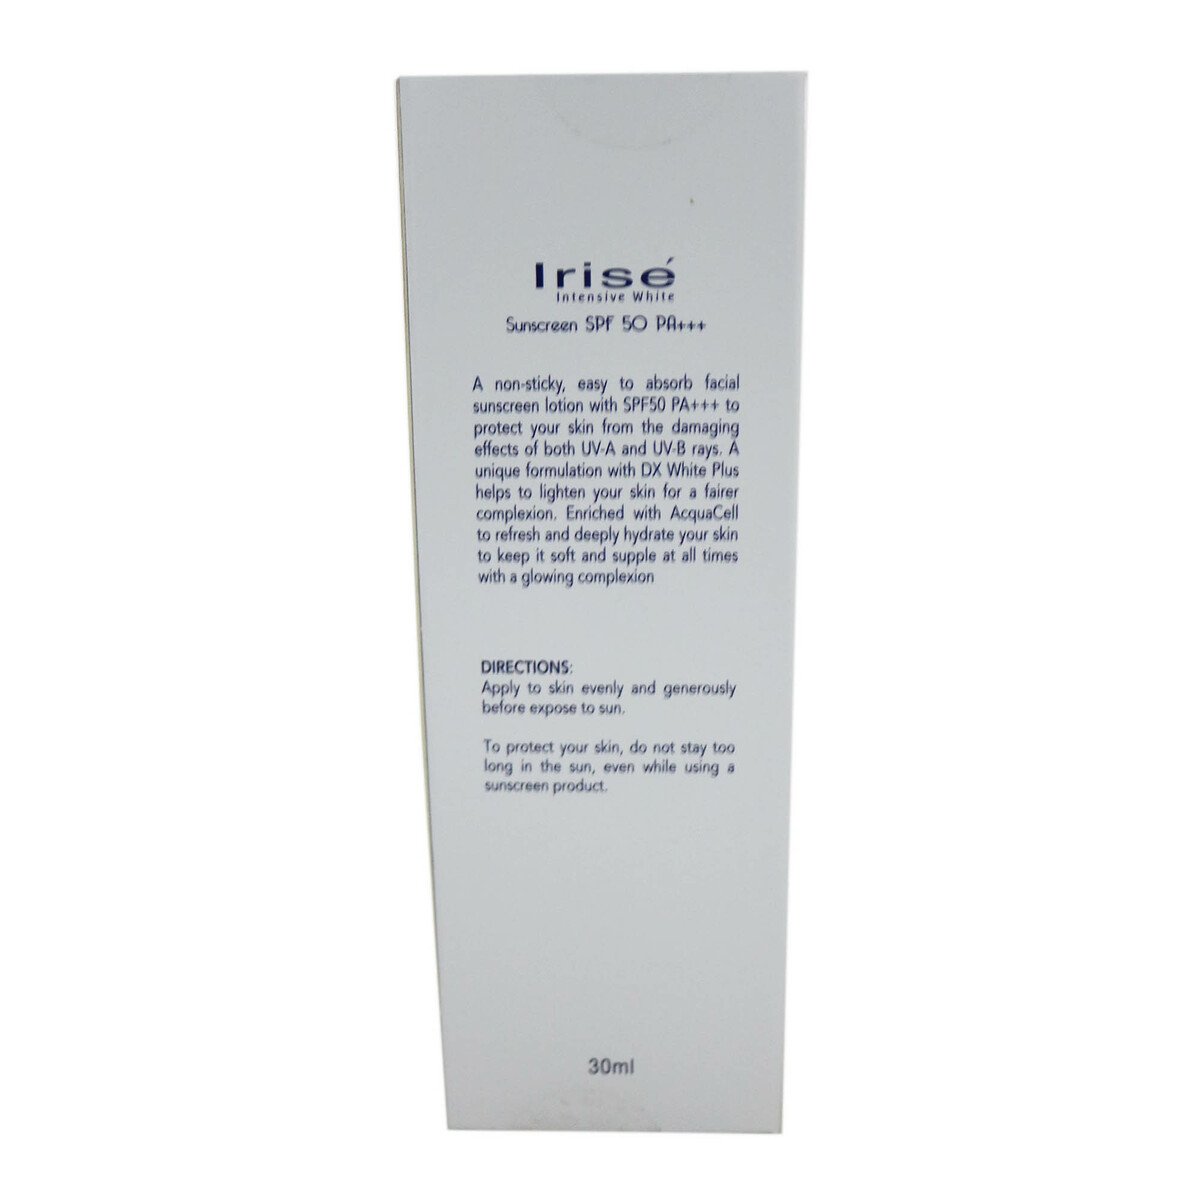 Irise Intensive White Sunscreen SPF50 PA+++ 30ml